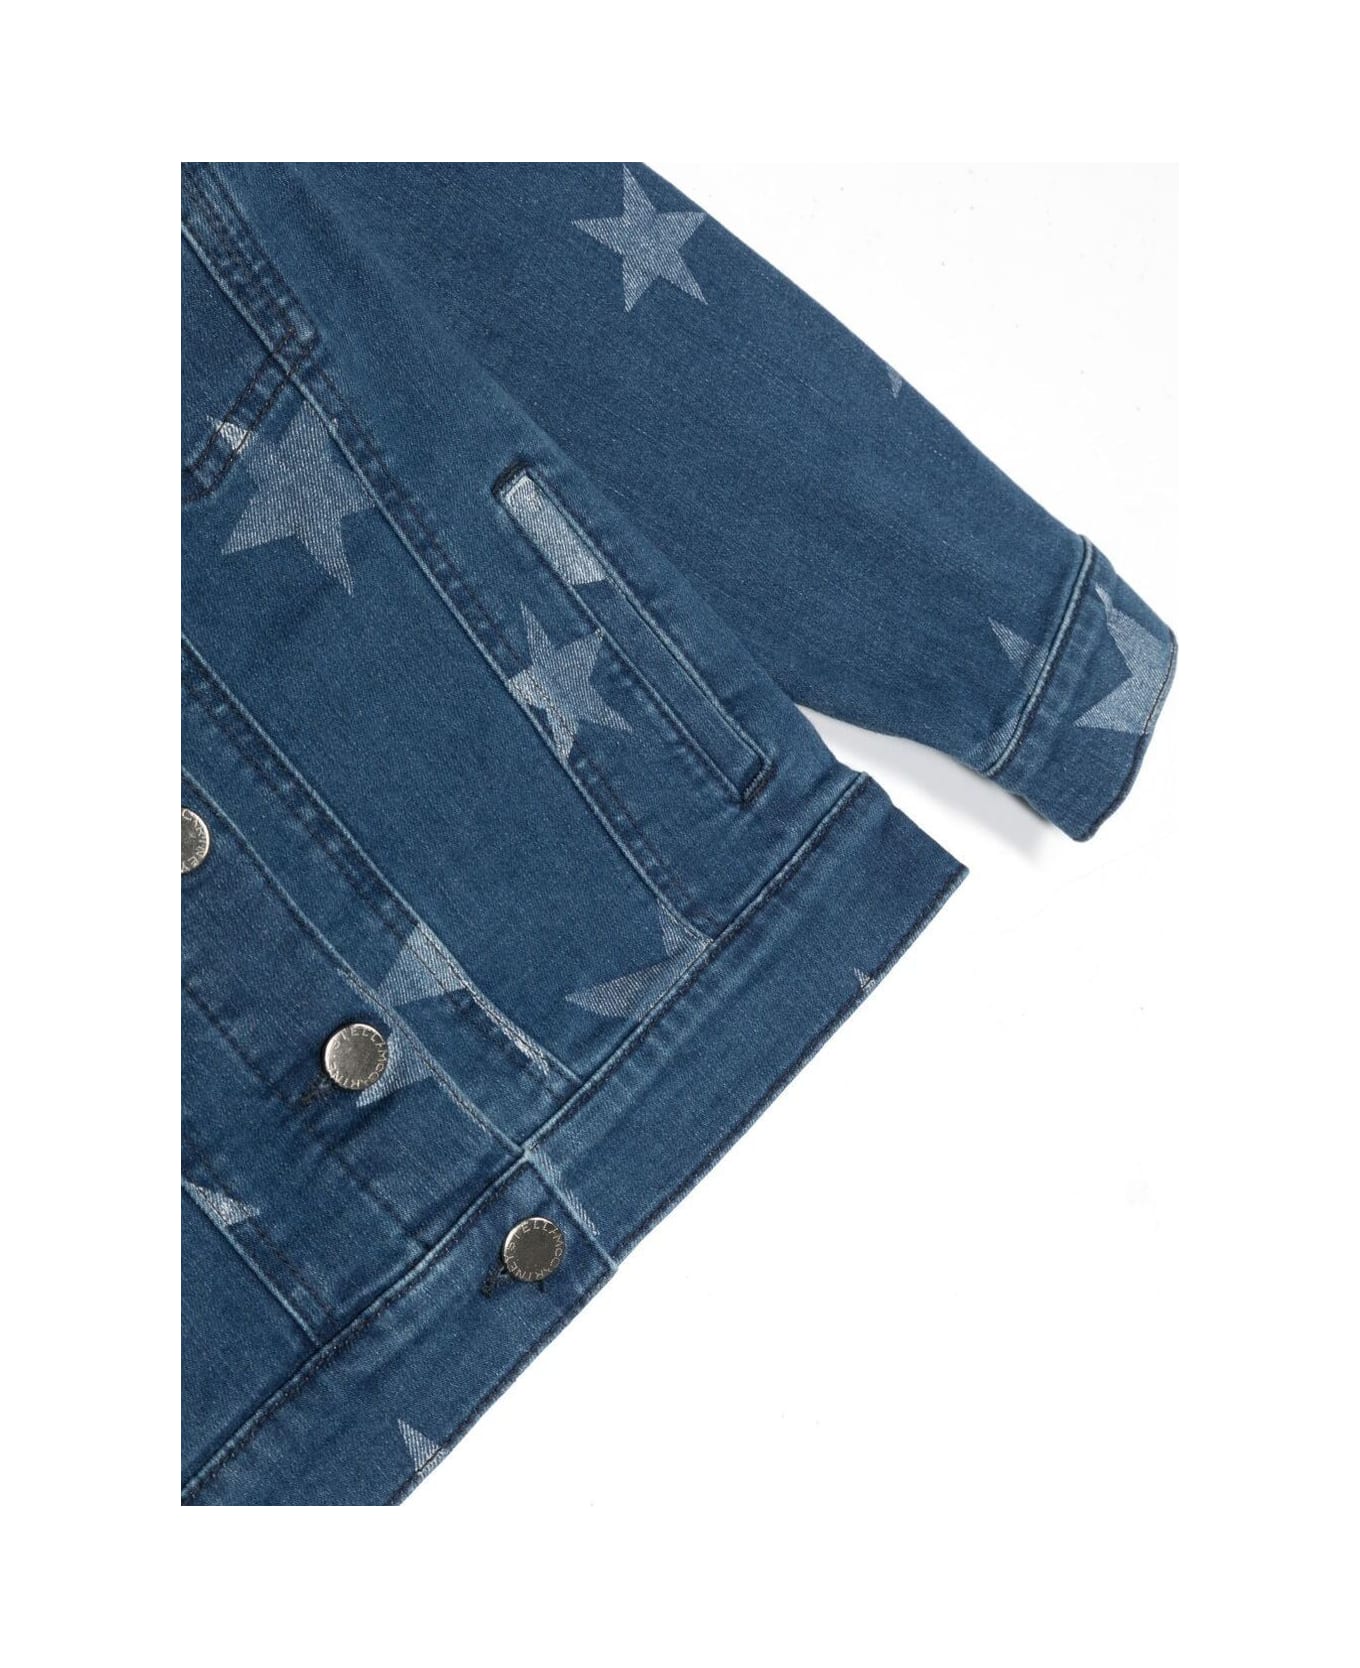 Stella McCartney Jeans Jacket With Star Print In Stretch Cotton Girl - Blu Denim コート＆ジャケット